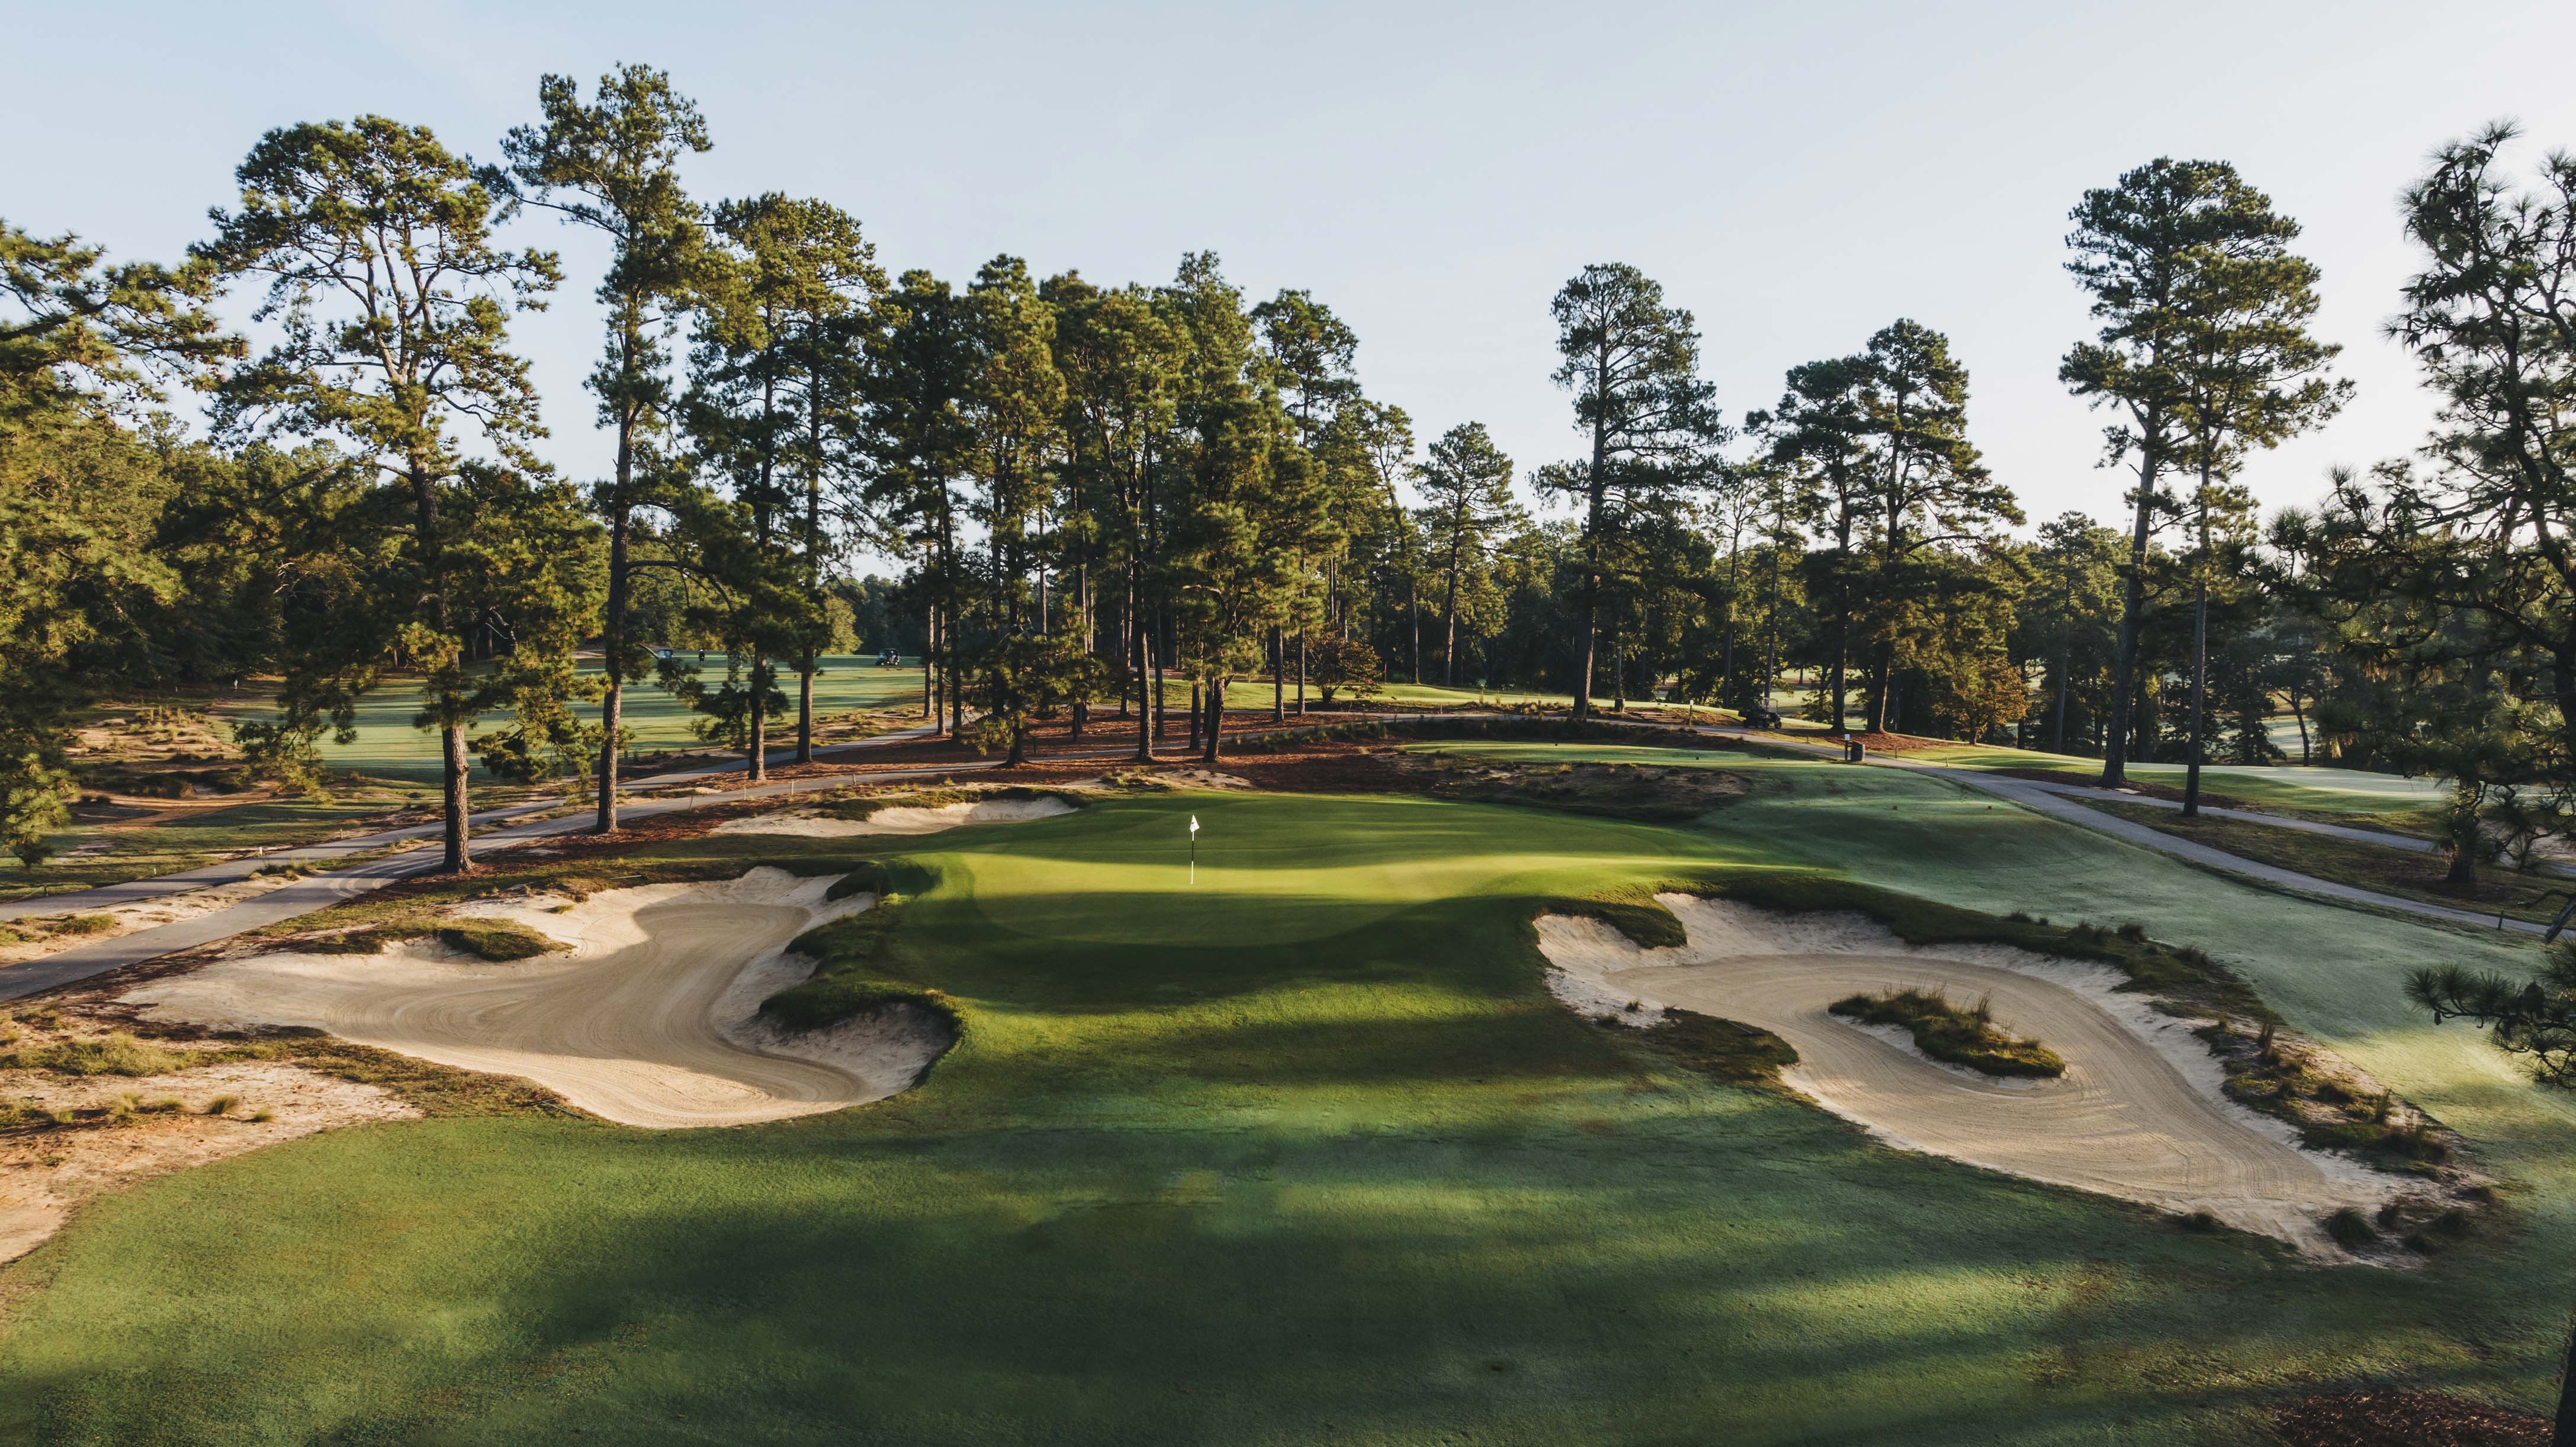 10. Southern Pines Golf Club